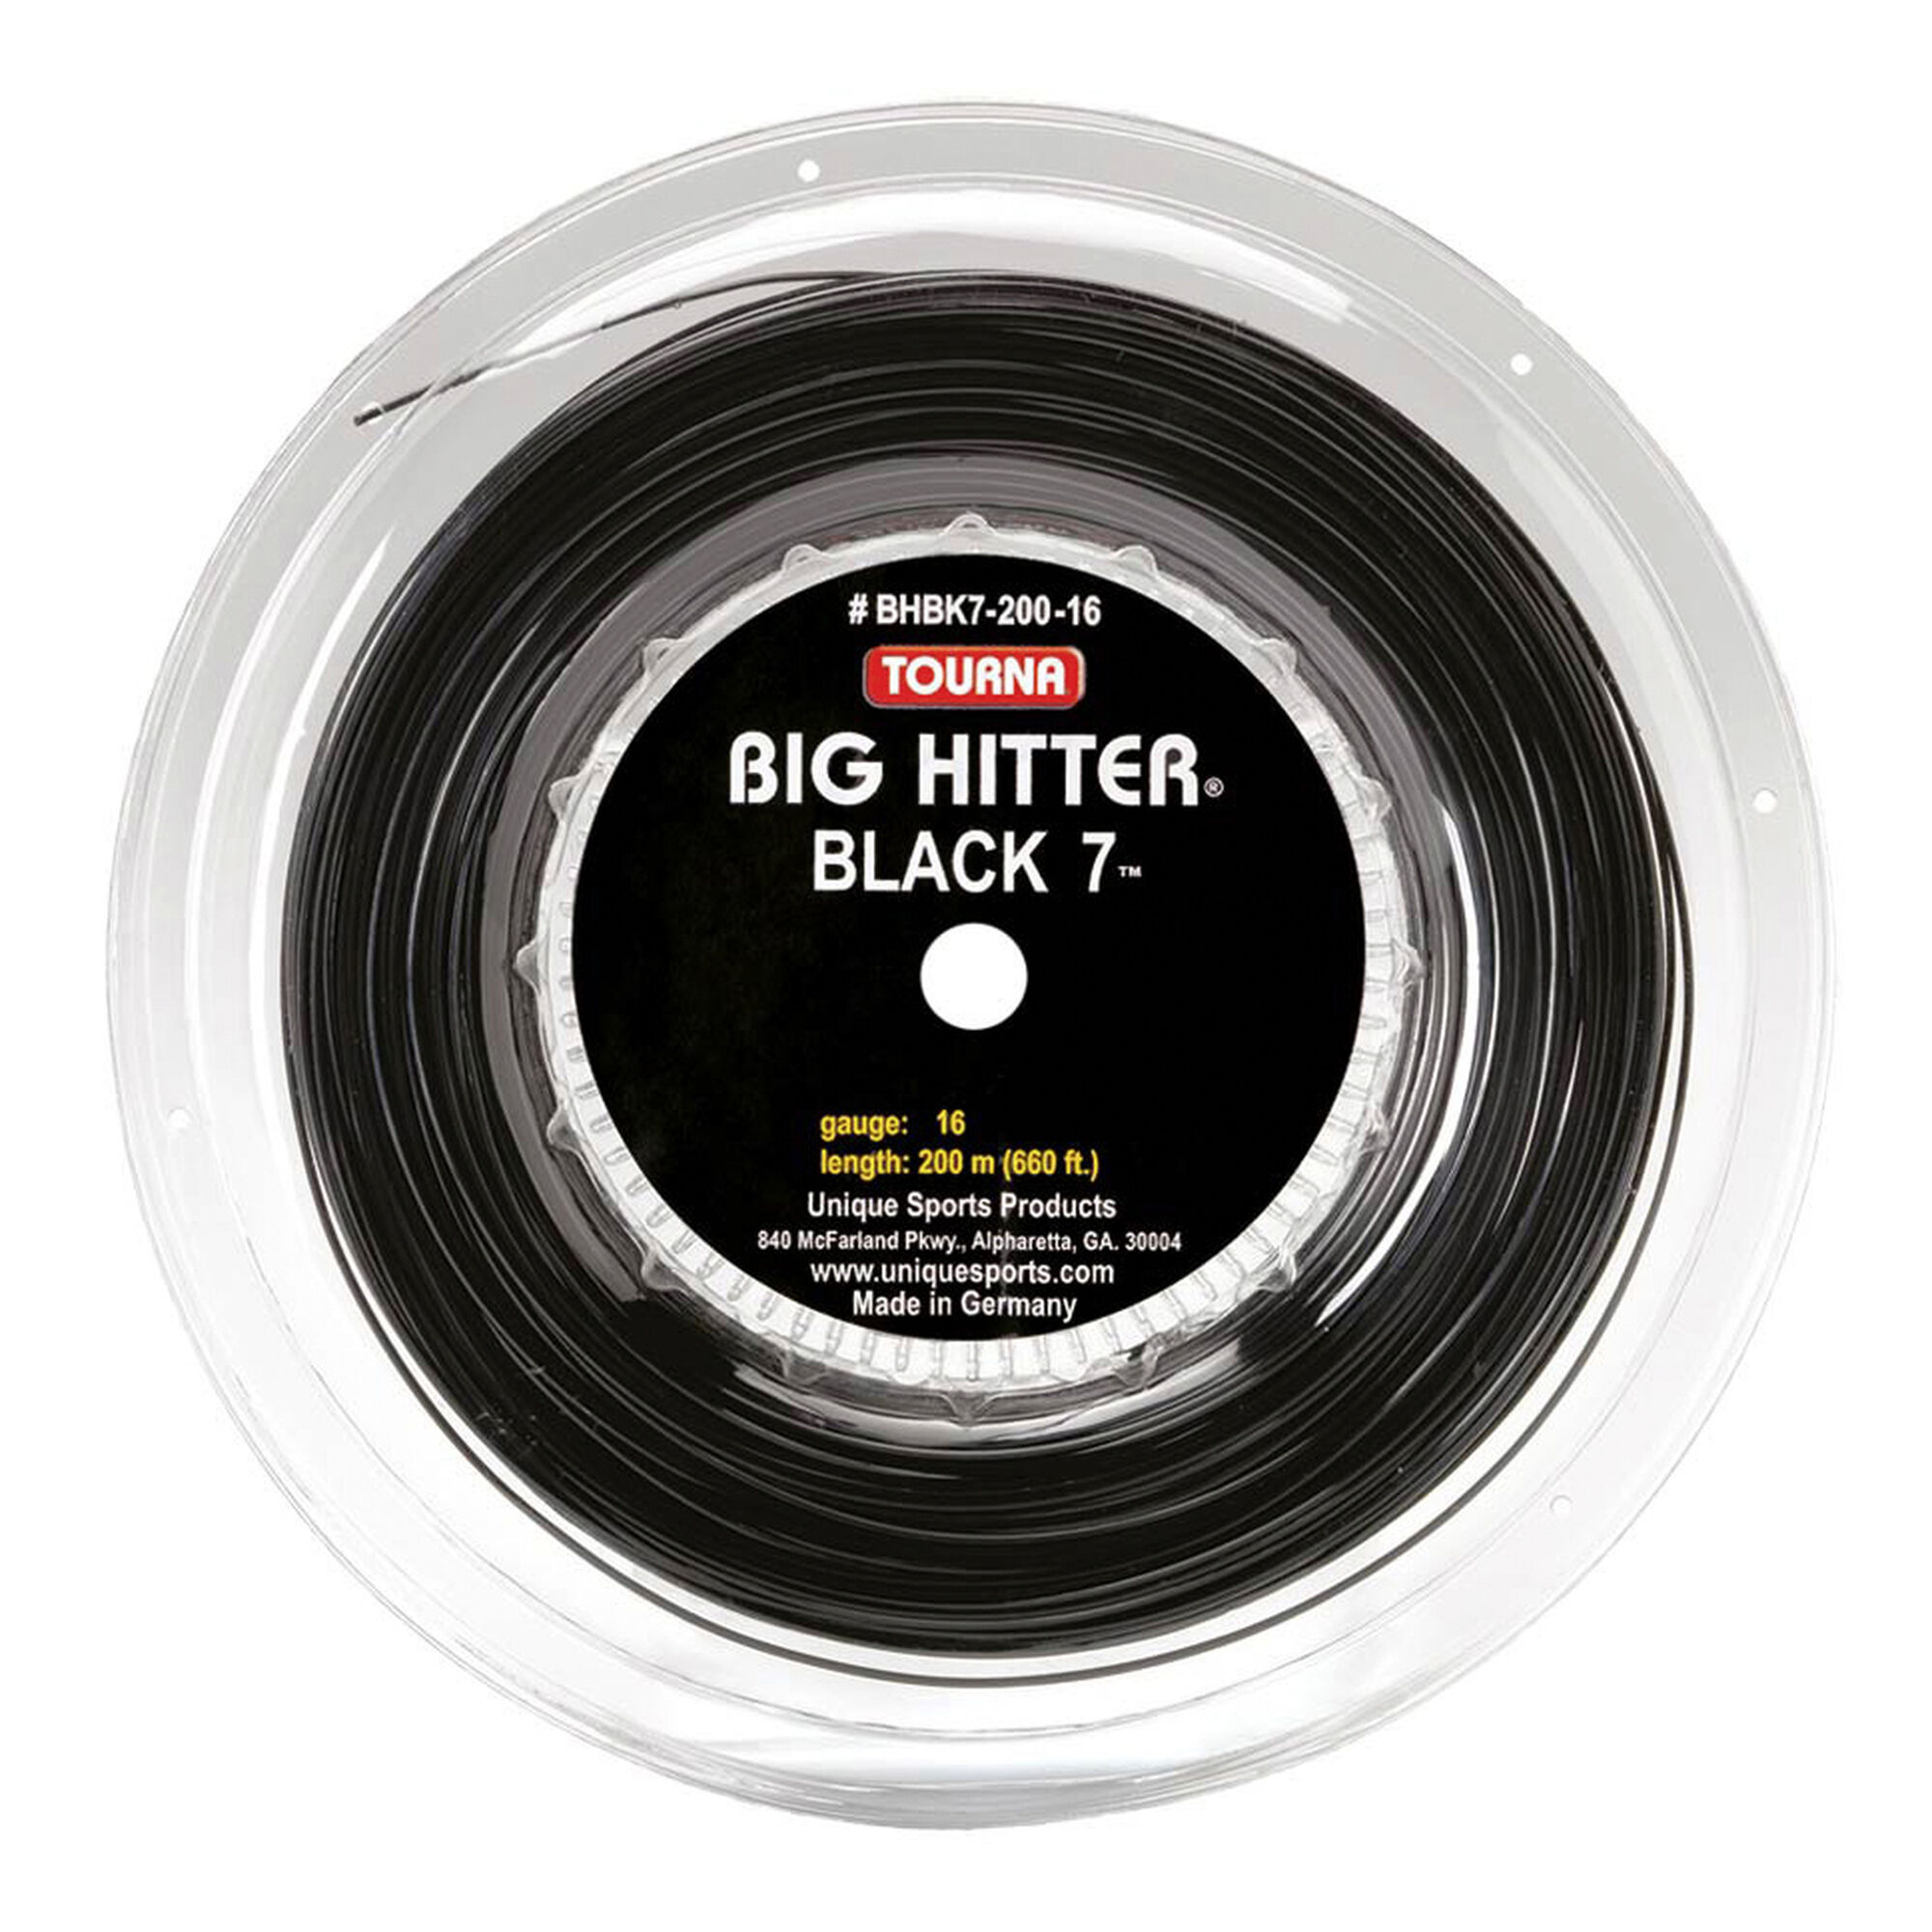 Buy Tourna Big Hitter 7 String Reel 220m Black online